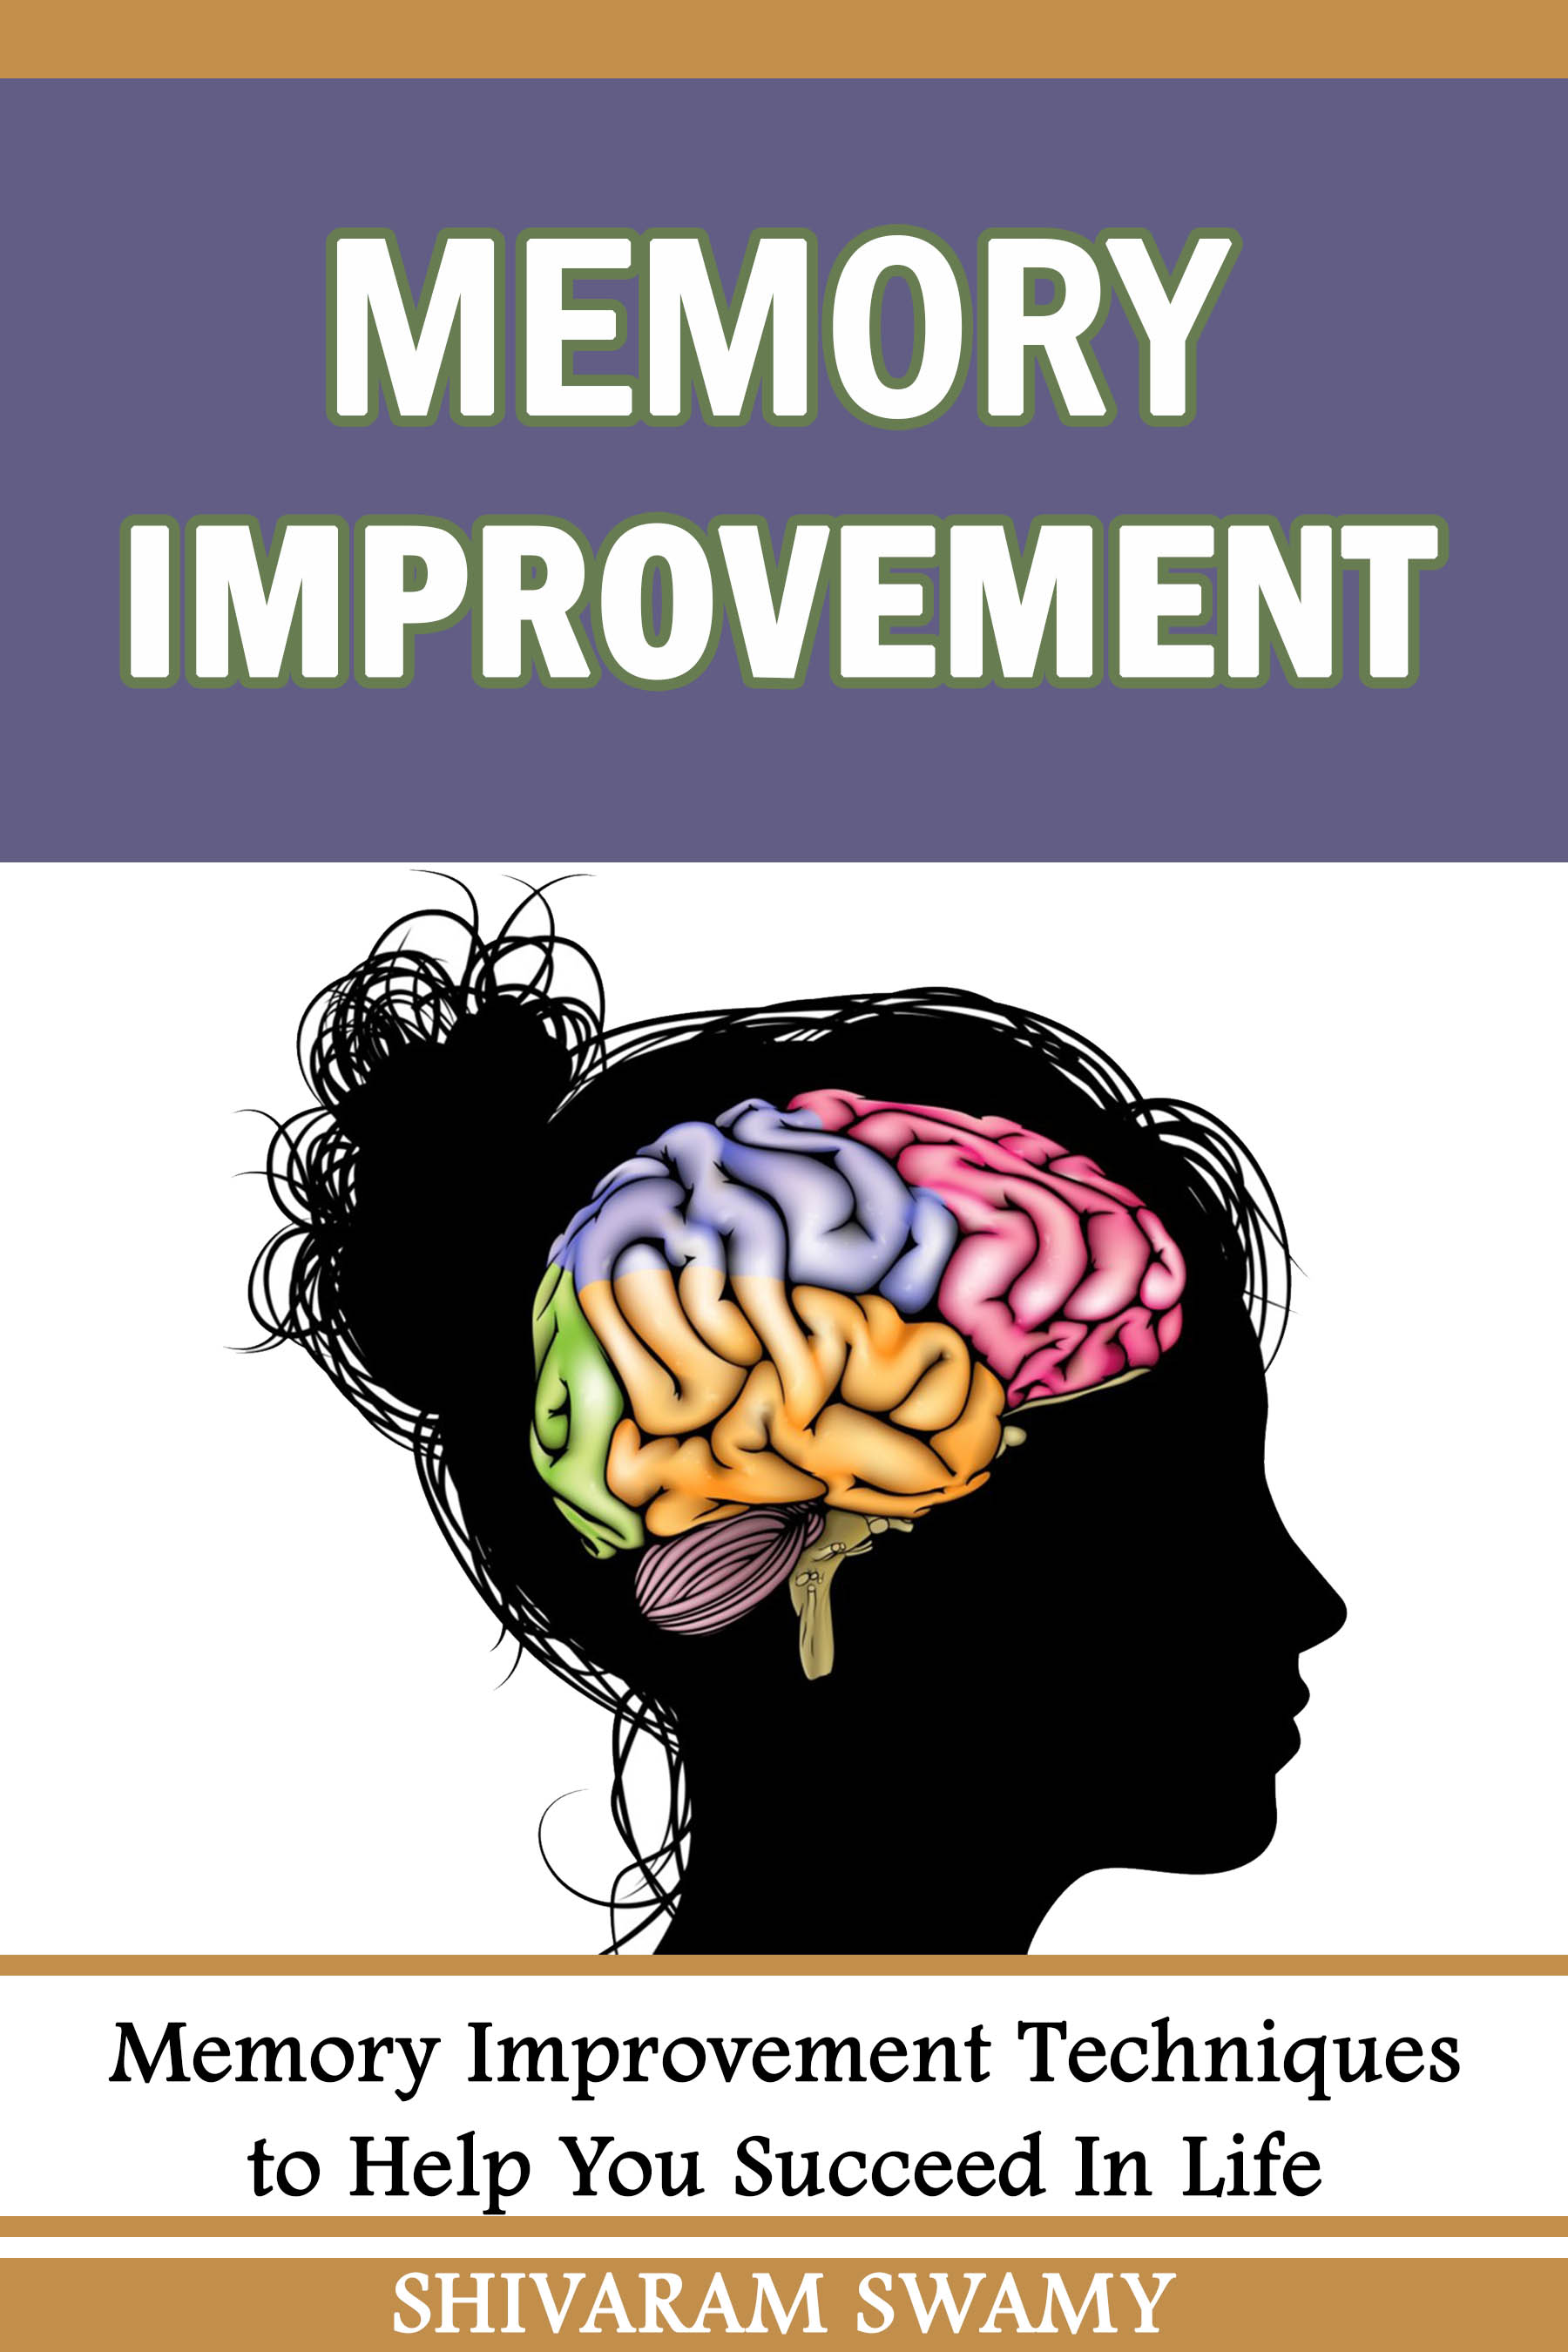 FREE: Memory Improvement: How to Improve Memory in Just 30 Days by Shivaram Swamy